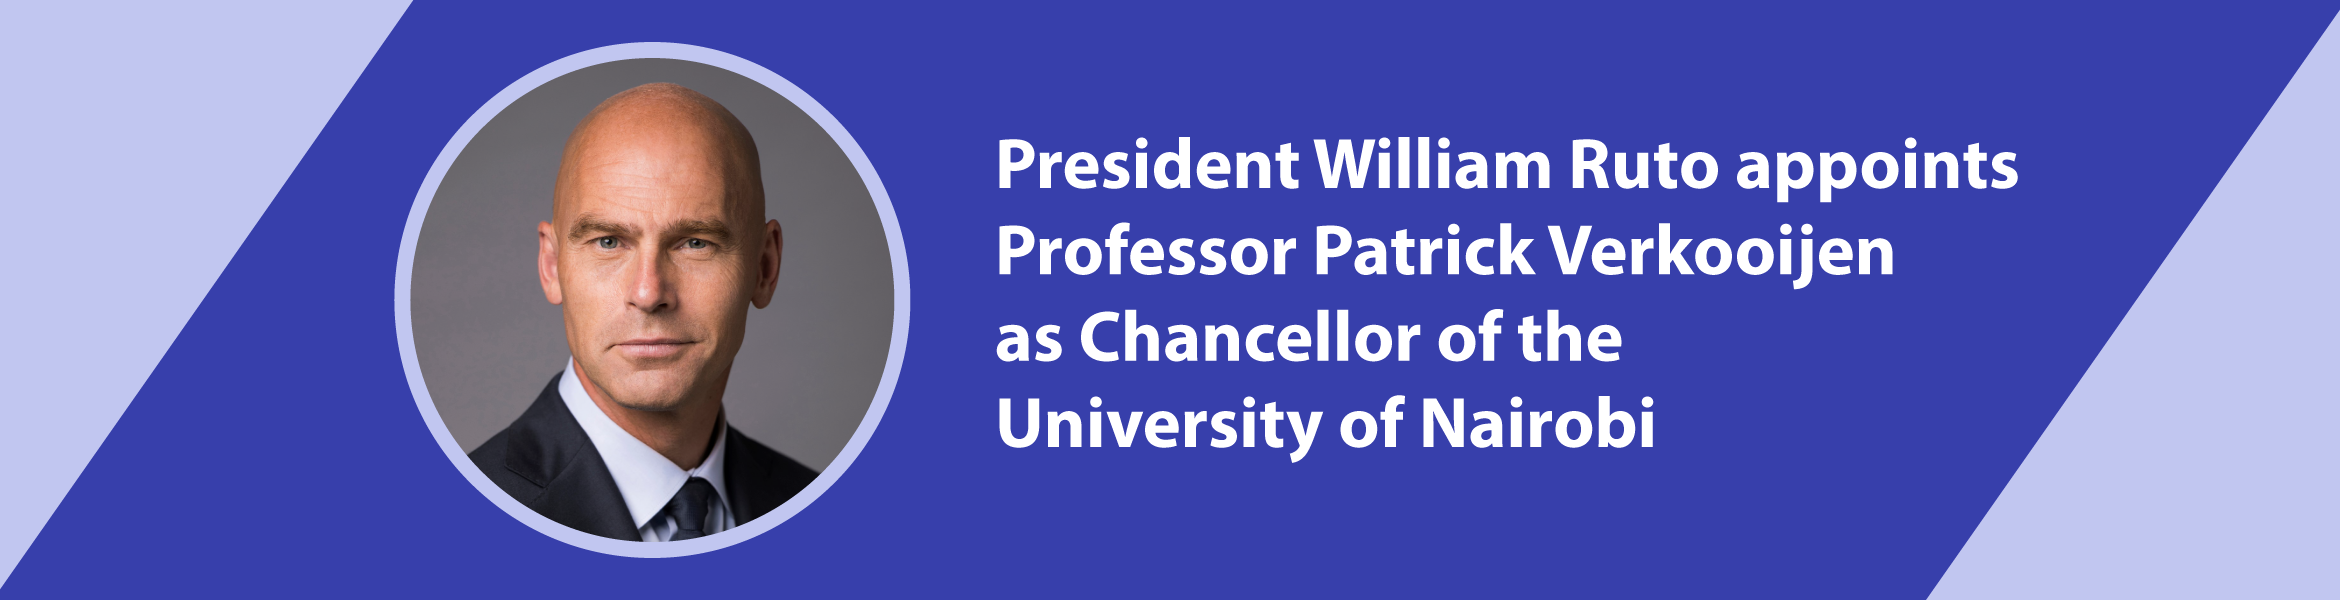 President Ruto appoints Professor Patrick Verkooijen as Chancellor of the University of Nairobi